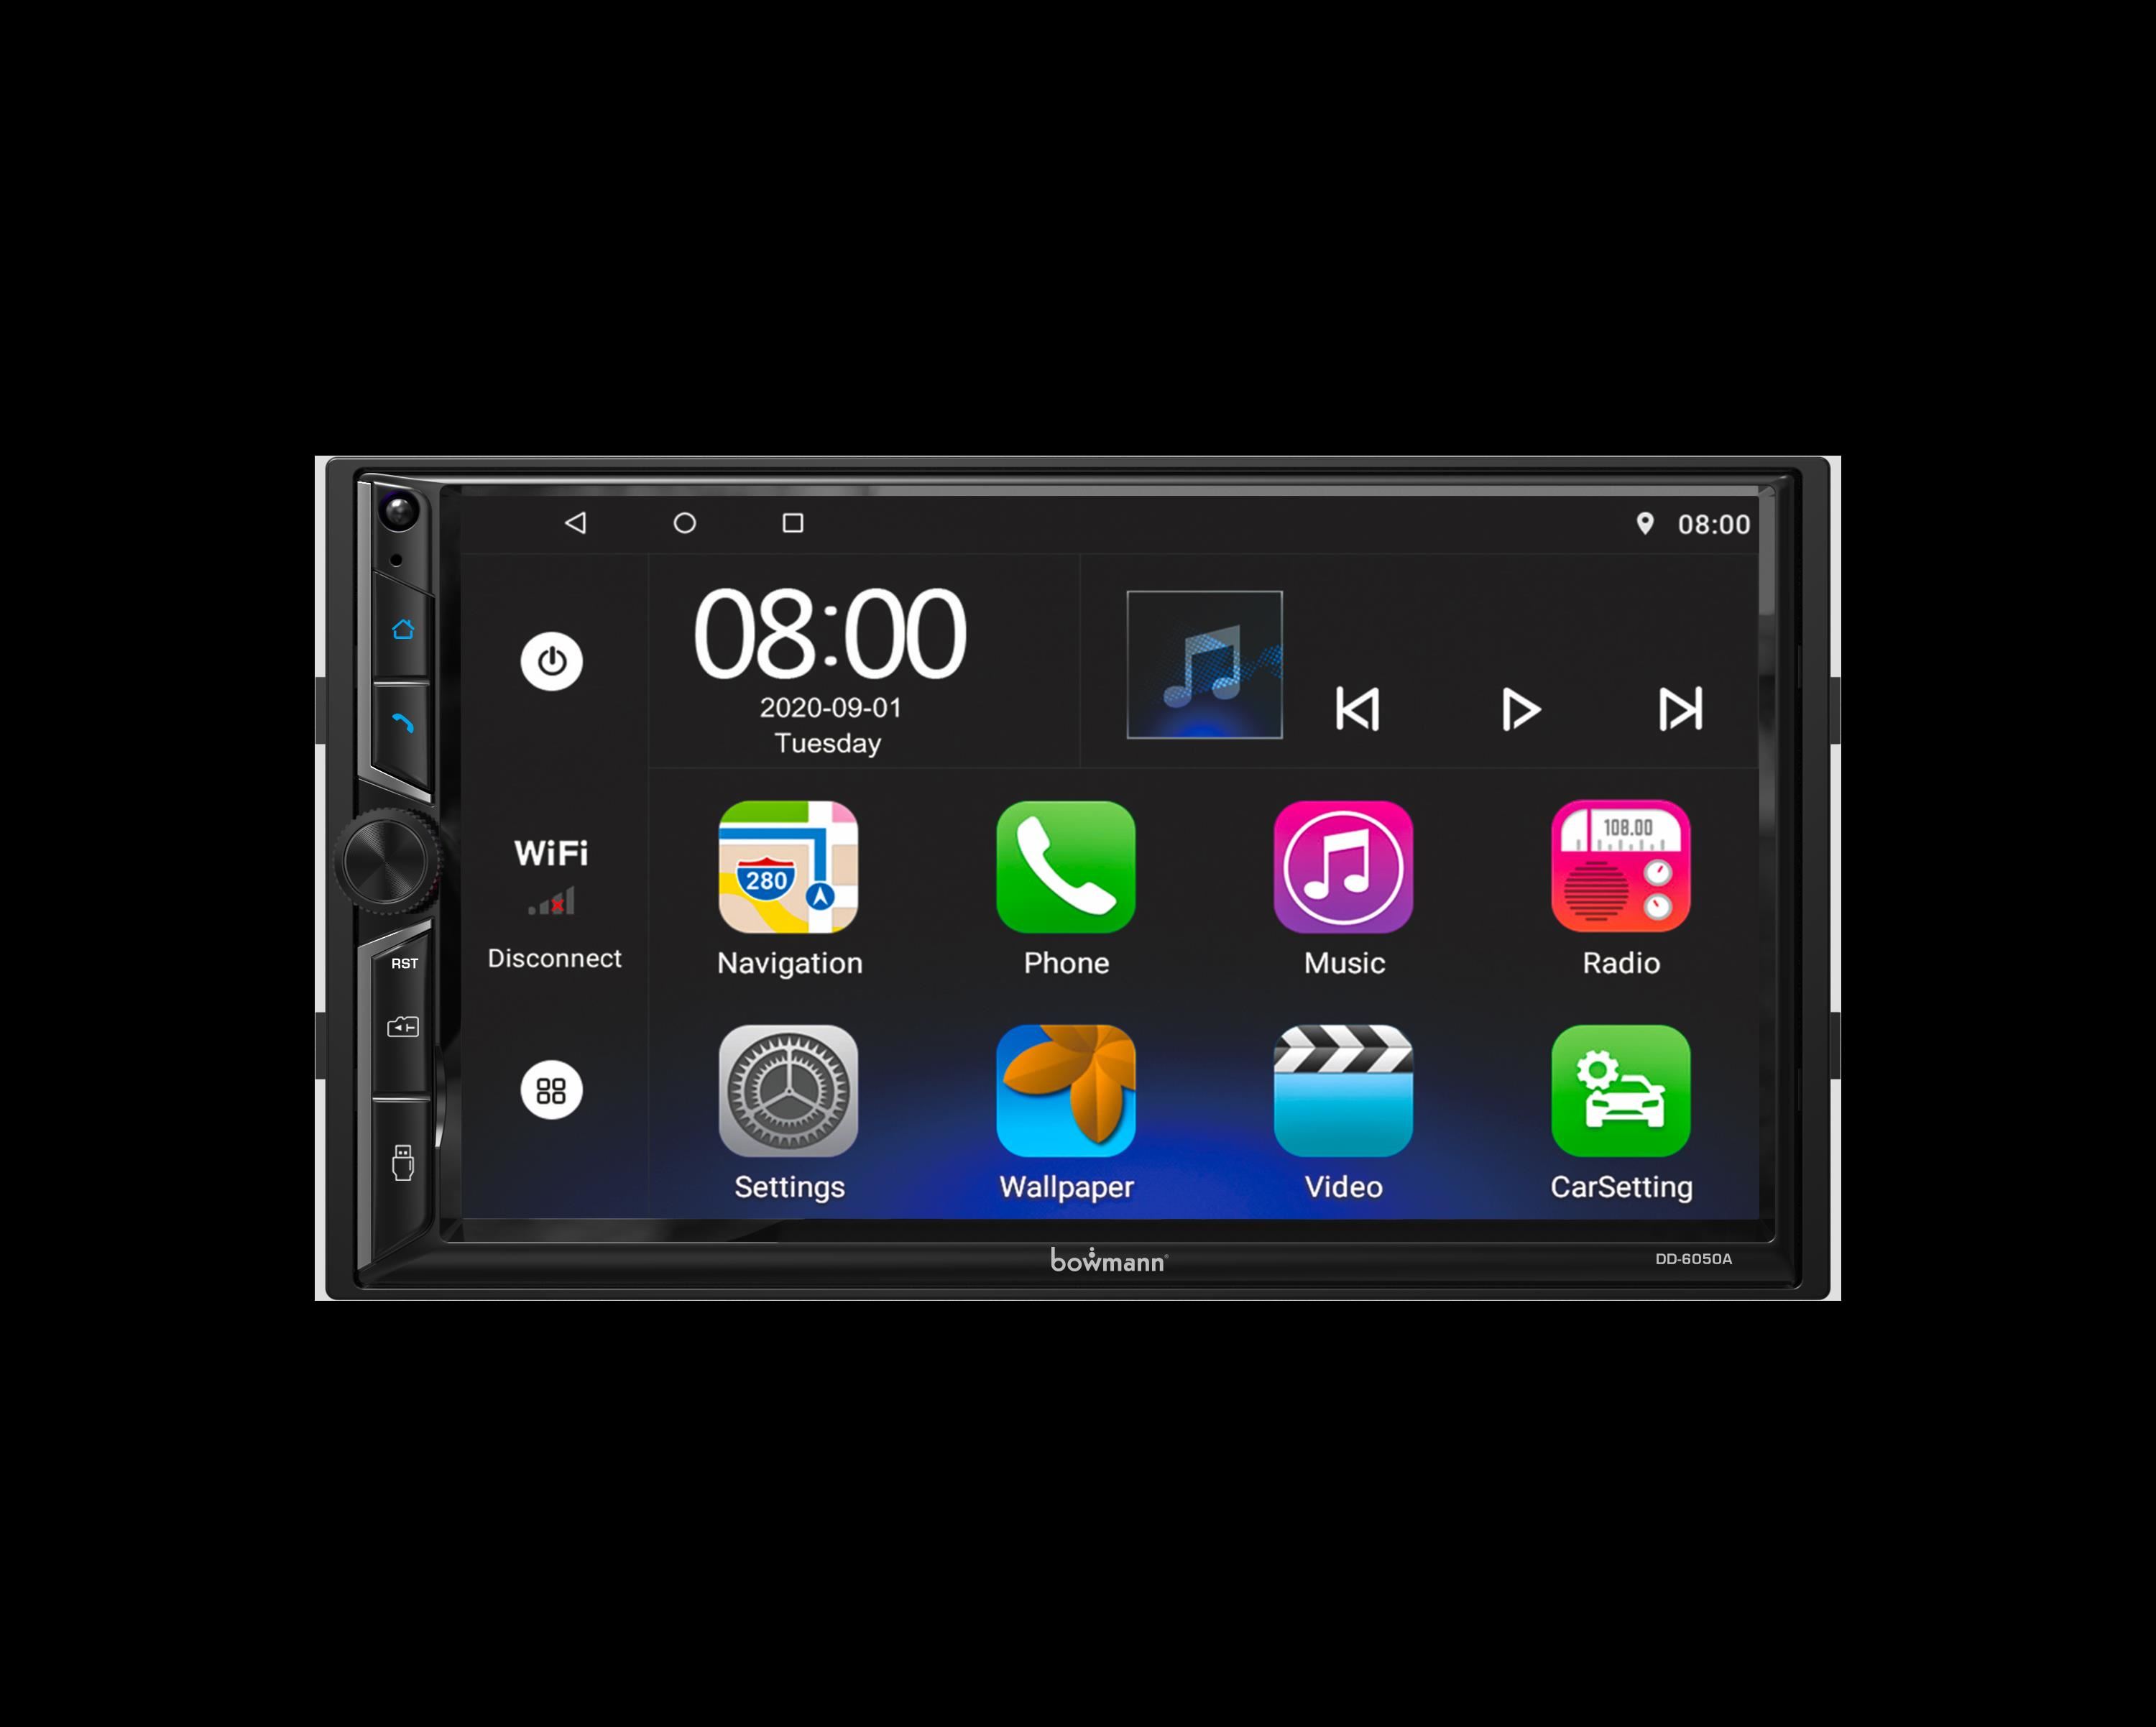 Auto Radio Android 2 Din Pantalla 7 Hd Bowmann 1gb+16gb Wifi